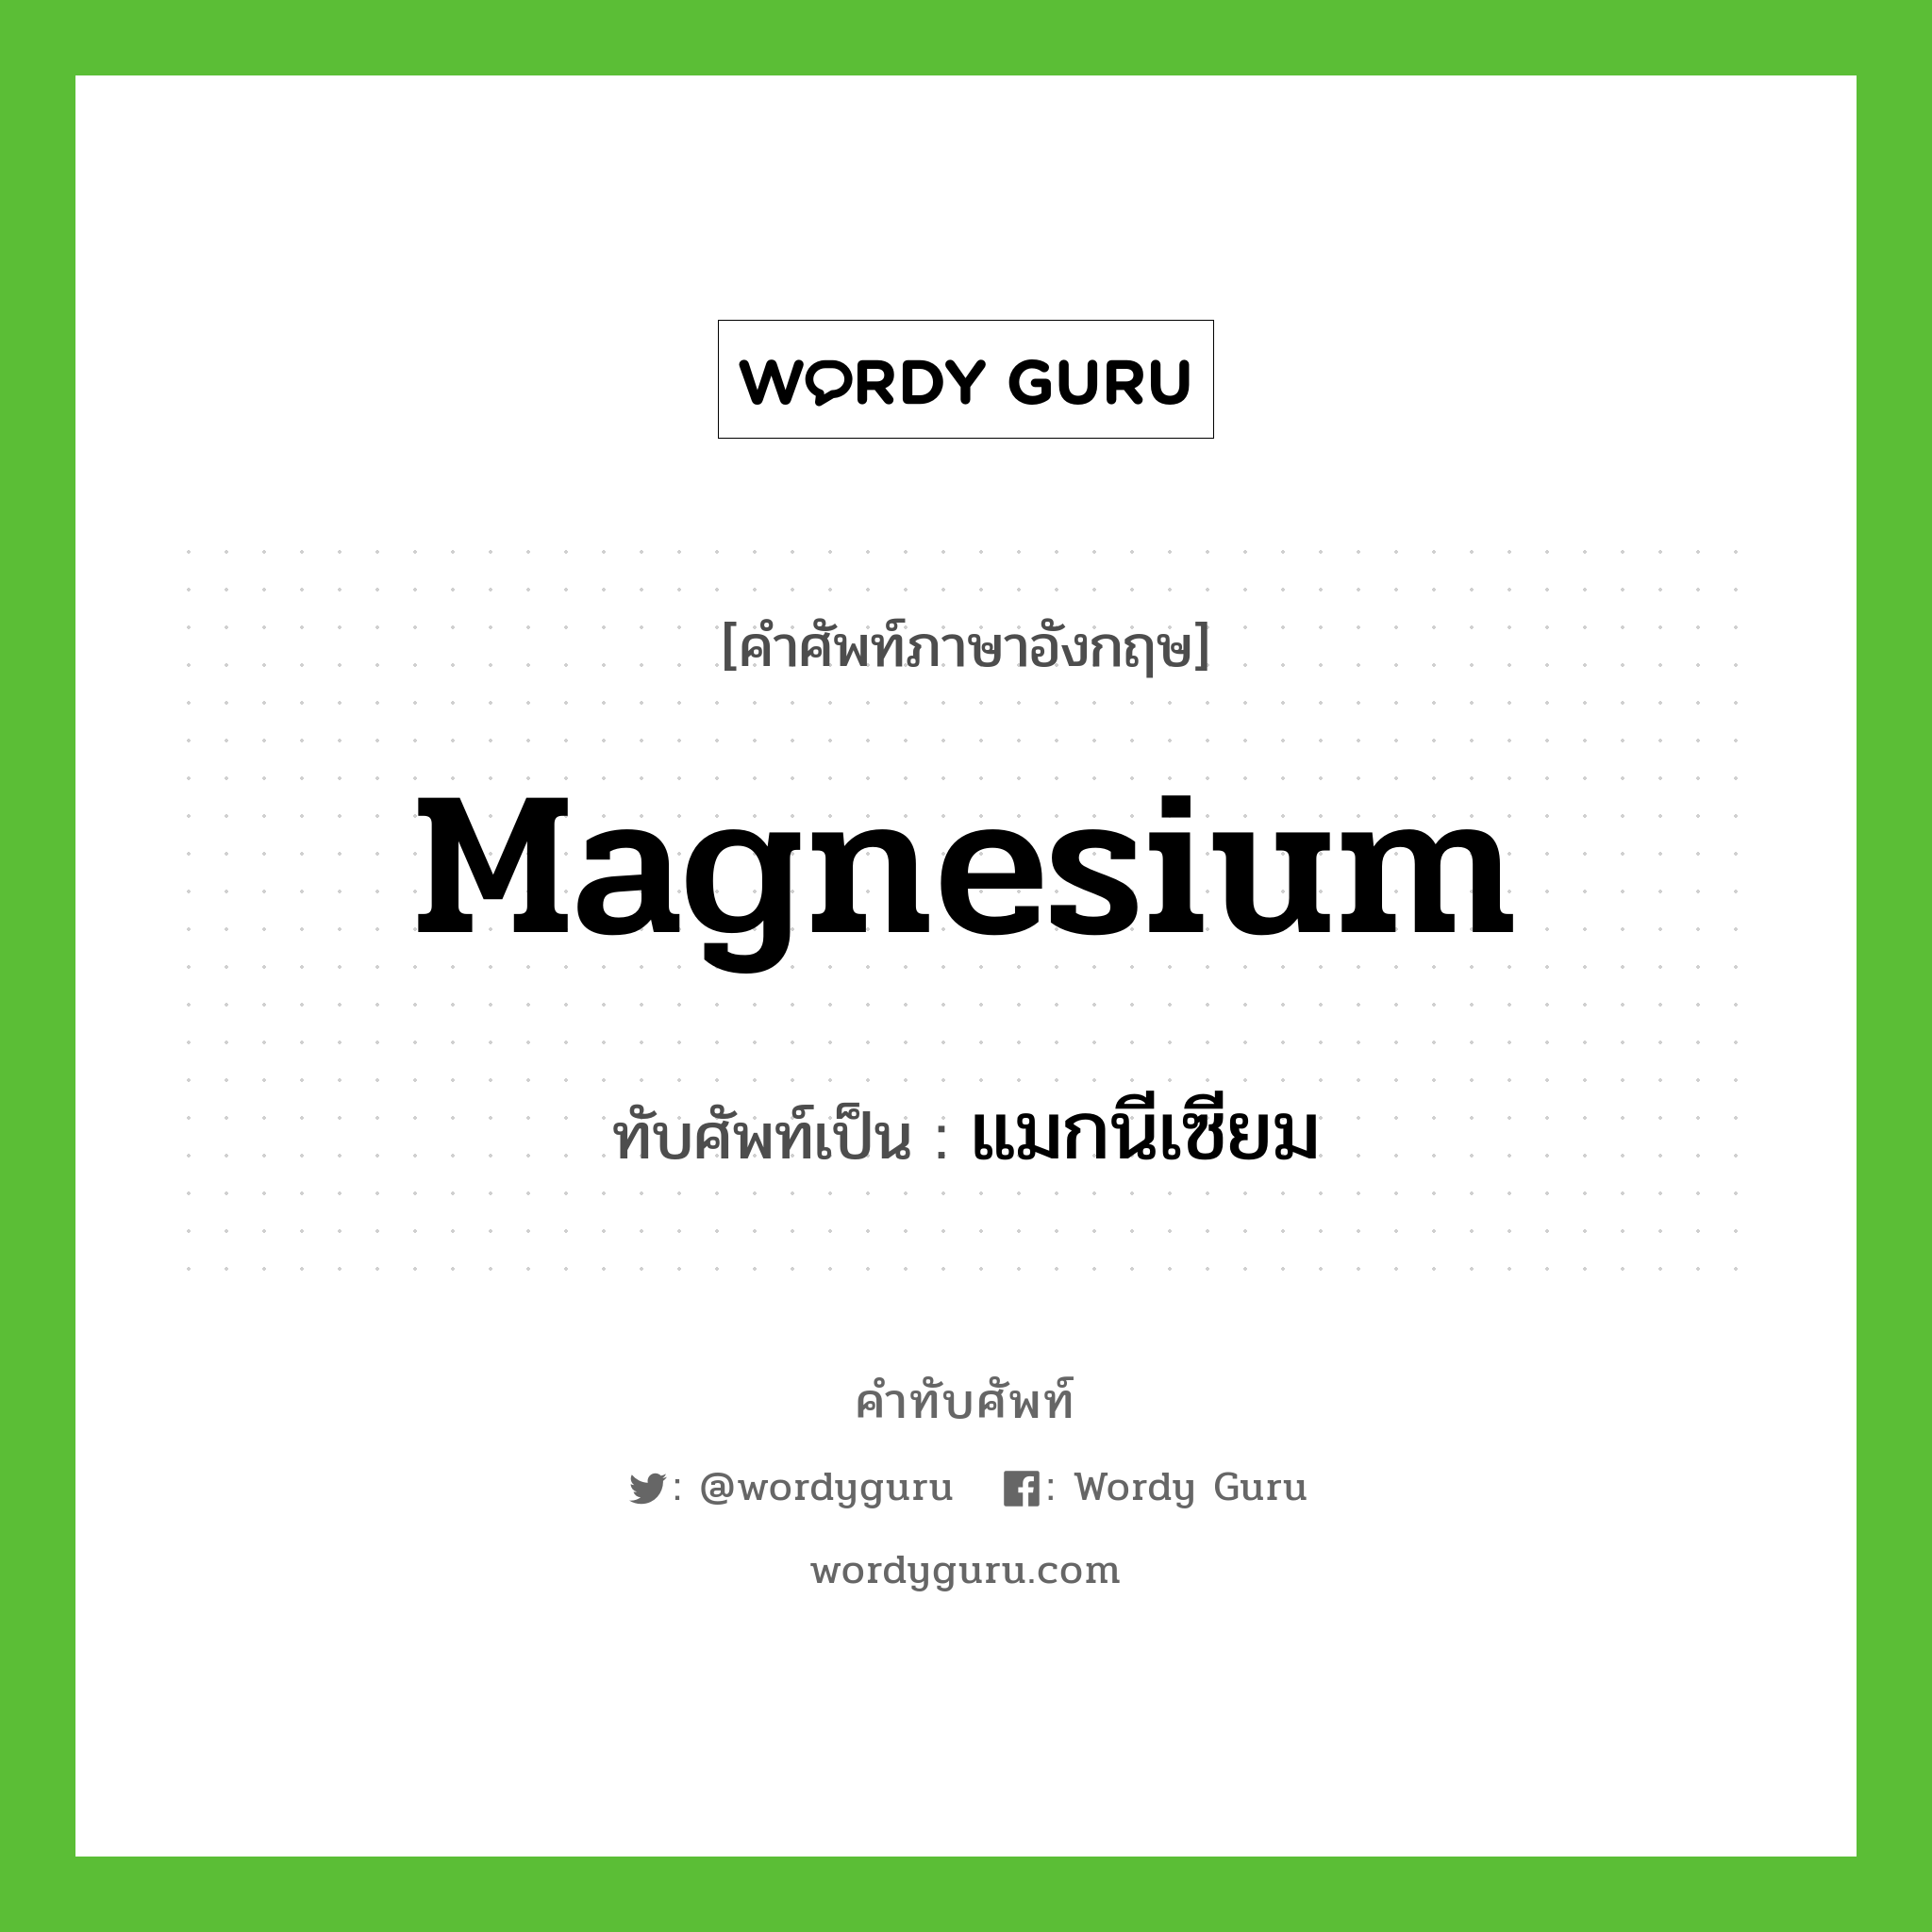 magnesium เขียนเป็นคำไทยว่าอะไร?, คำศัพท์ภาษาอังกฤษ magnesium ทับศัพท์เป็น แมกนีเซียม